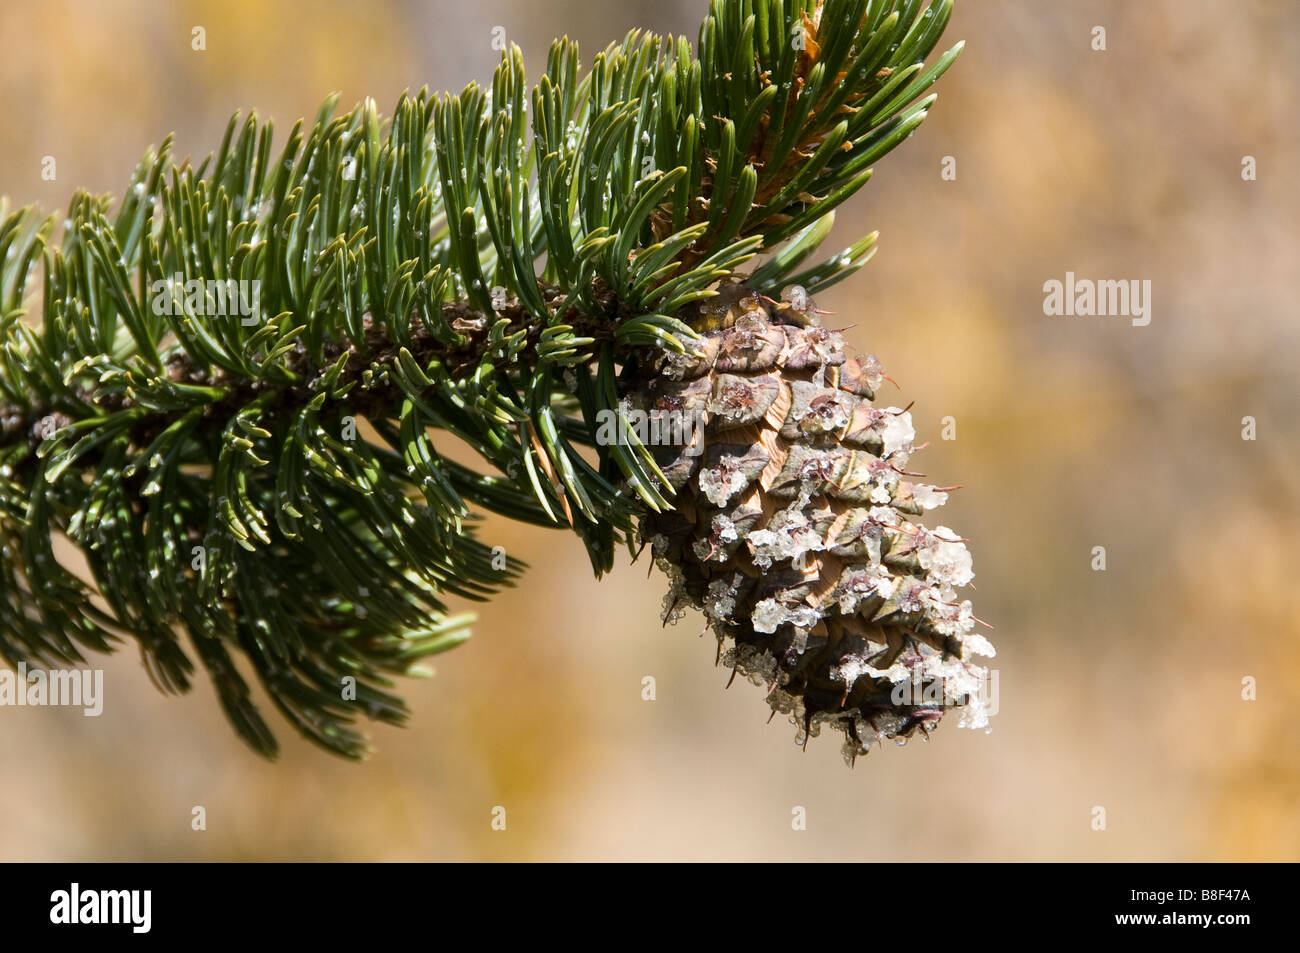 Rocky Mountain bristlecone pine (Pinus aristata) cone, Kenosha Pass, US Highway 285, Park County, Colorado. Stock Photo